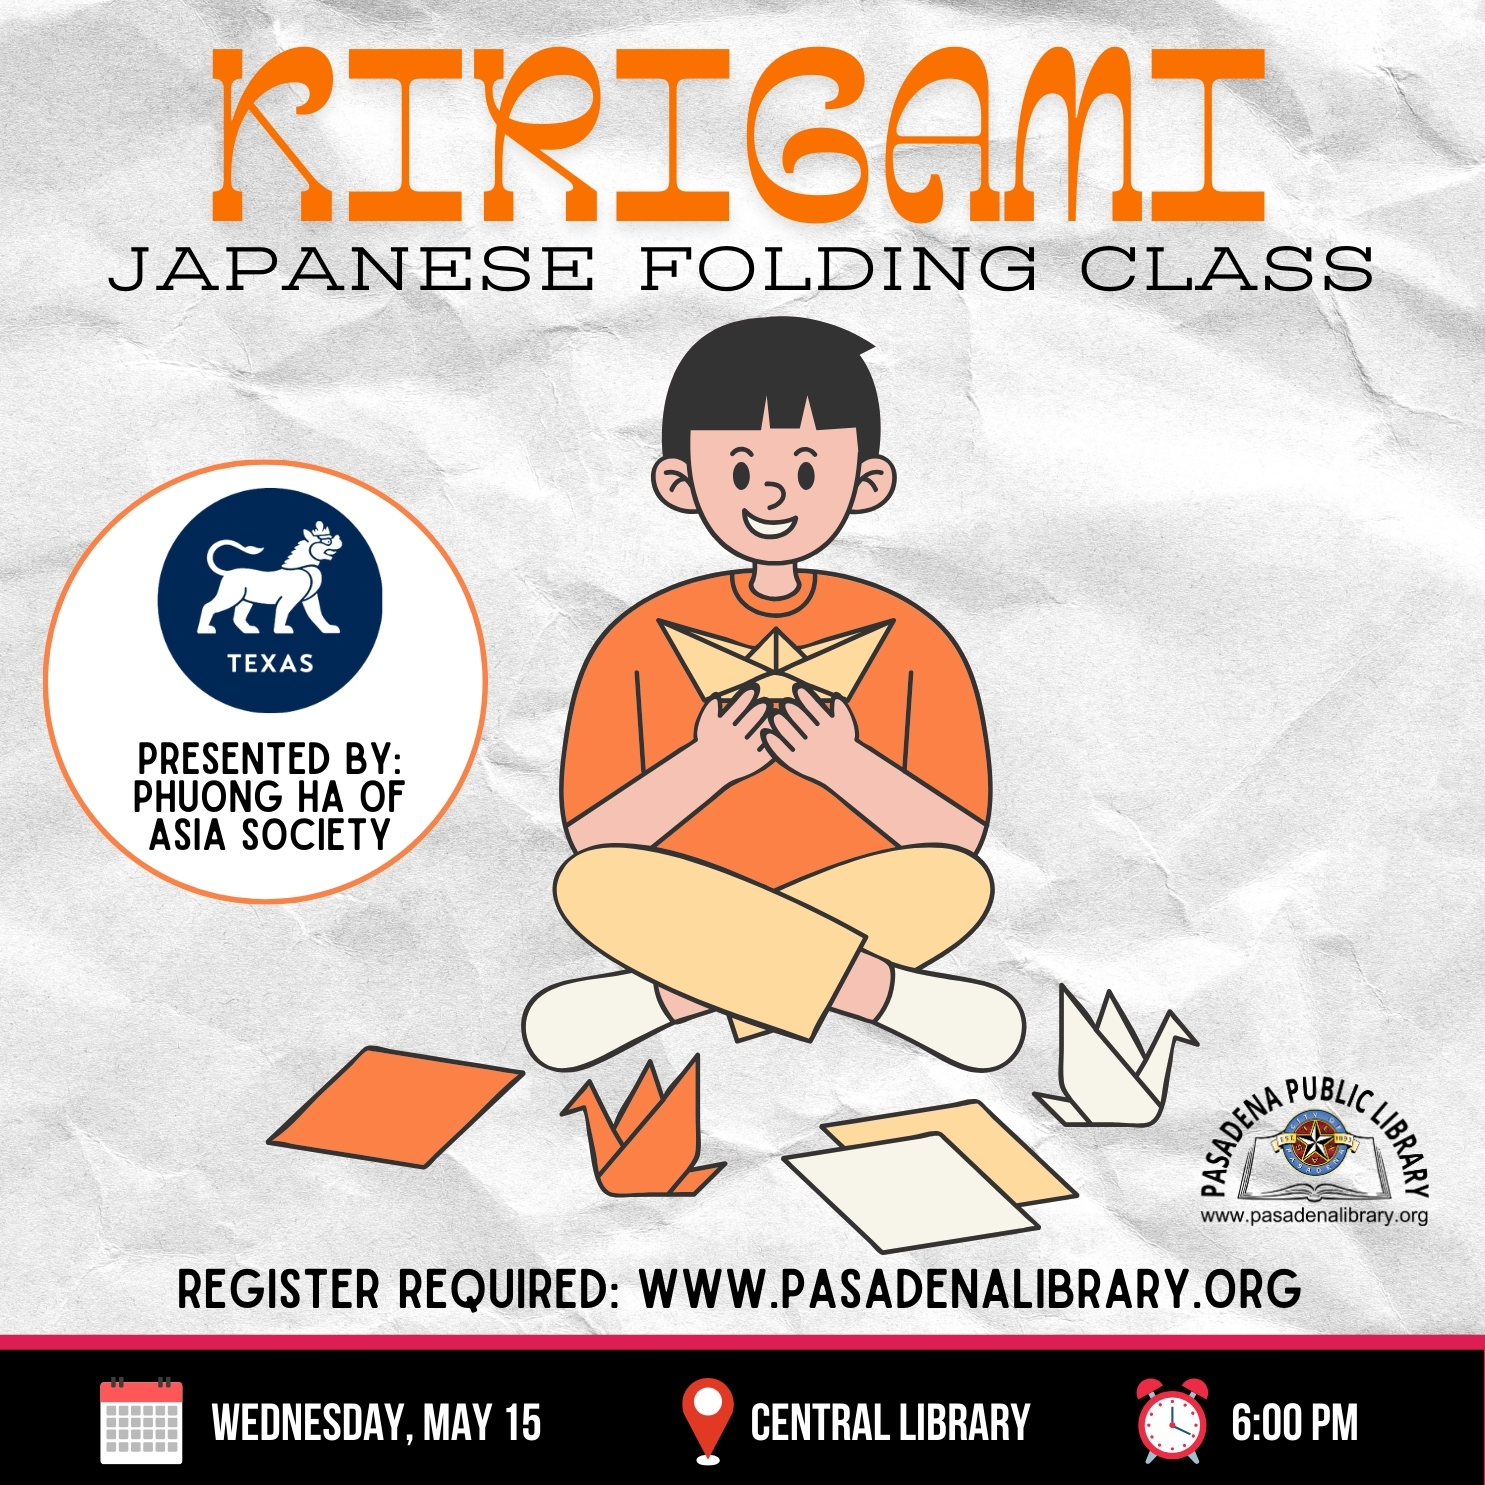 FAIRMONT: Kirigami - Japanese Folding Class